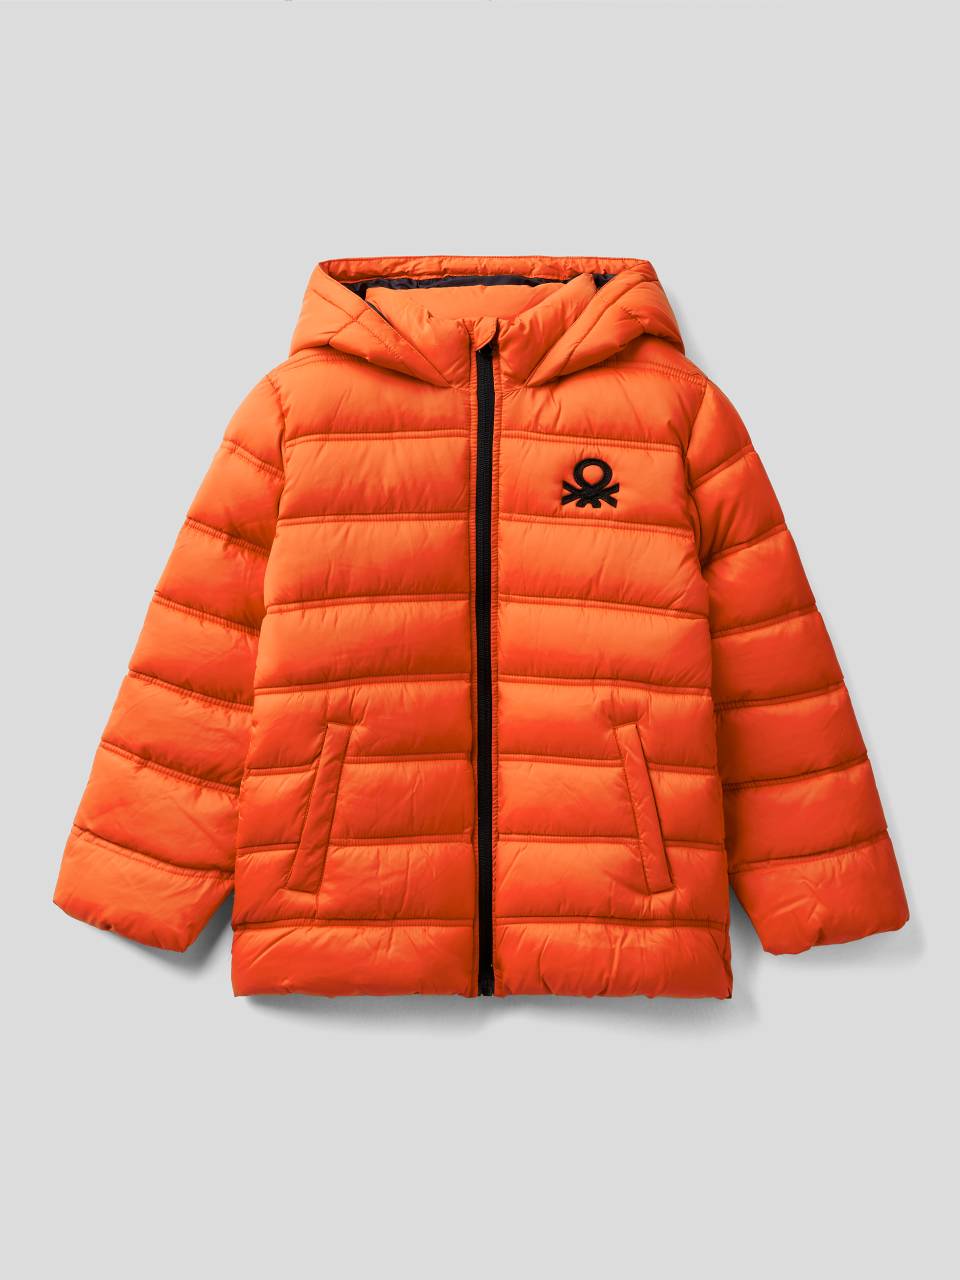 Boys' Short Puffer Jacket - All in Motion Orange XS 4/5